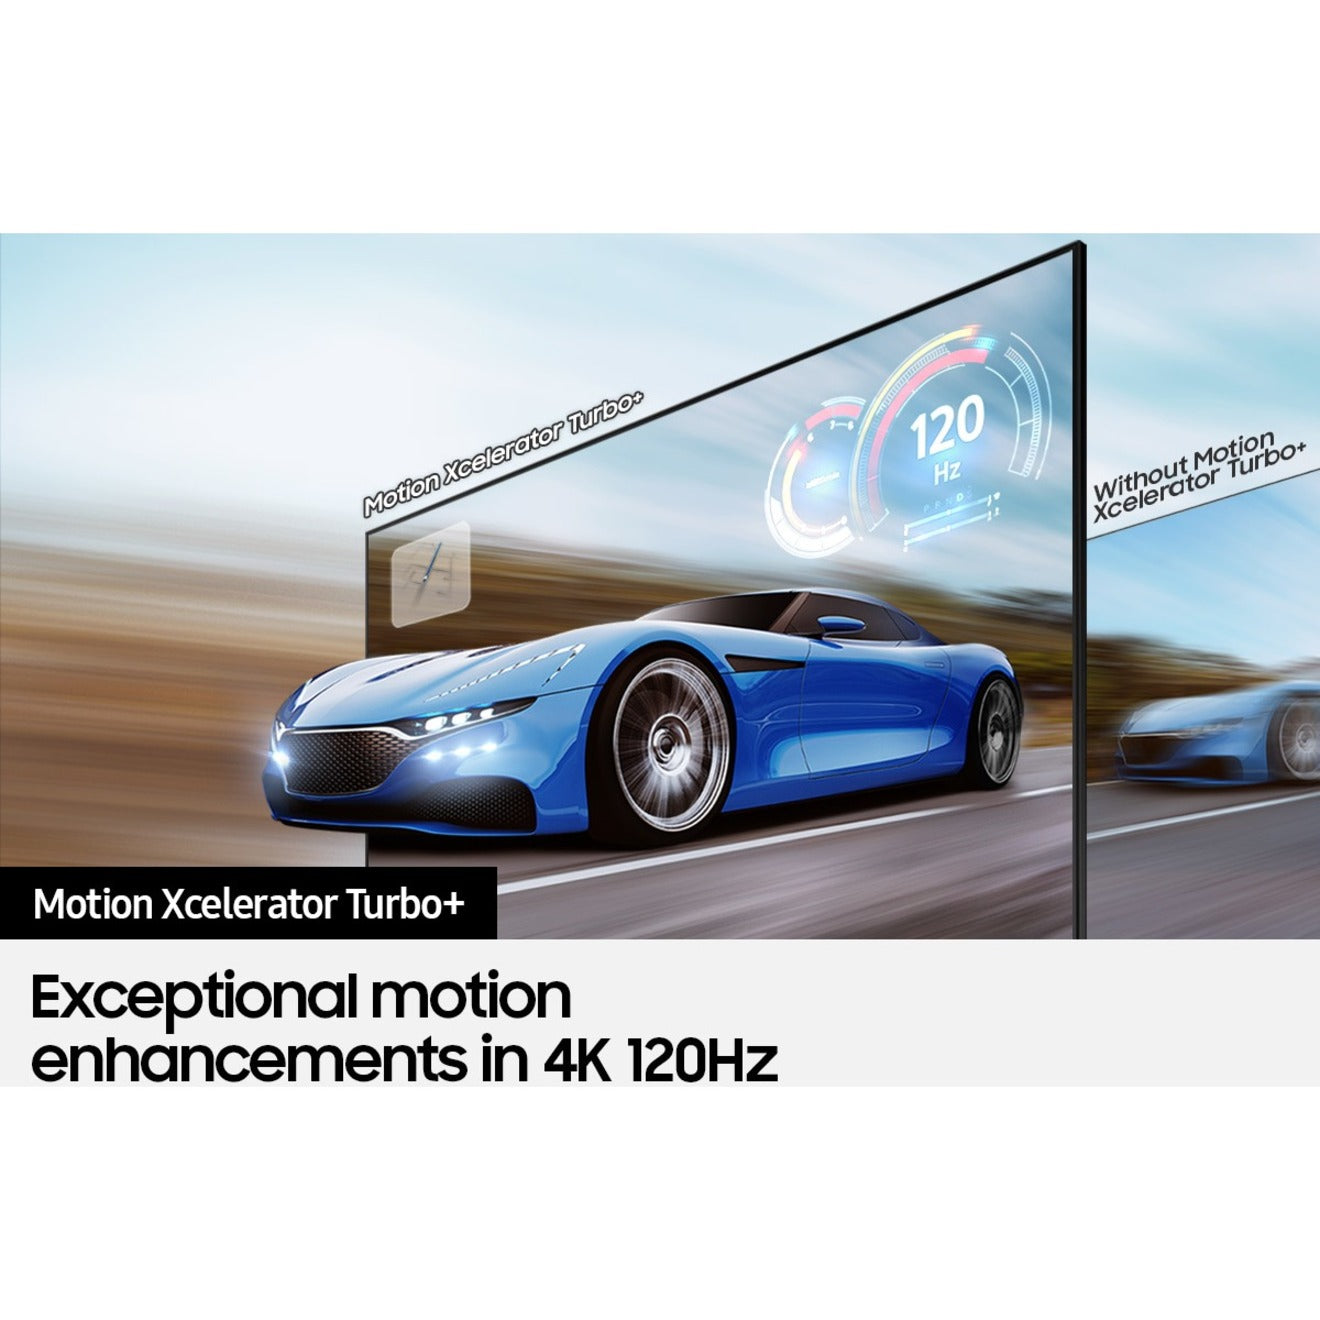 Samsung QN55Q70AAFXZA Q70A Smart LED-LCD TV, 55", 4K UHD, Quantum Dot Technology, Motion Rate 240